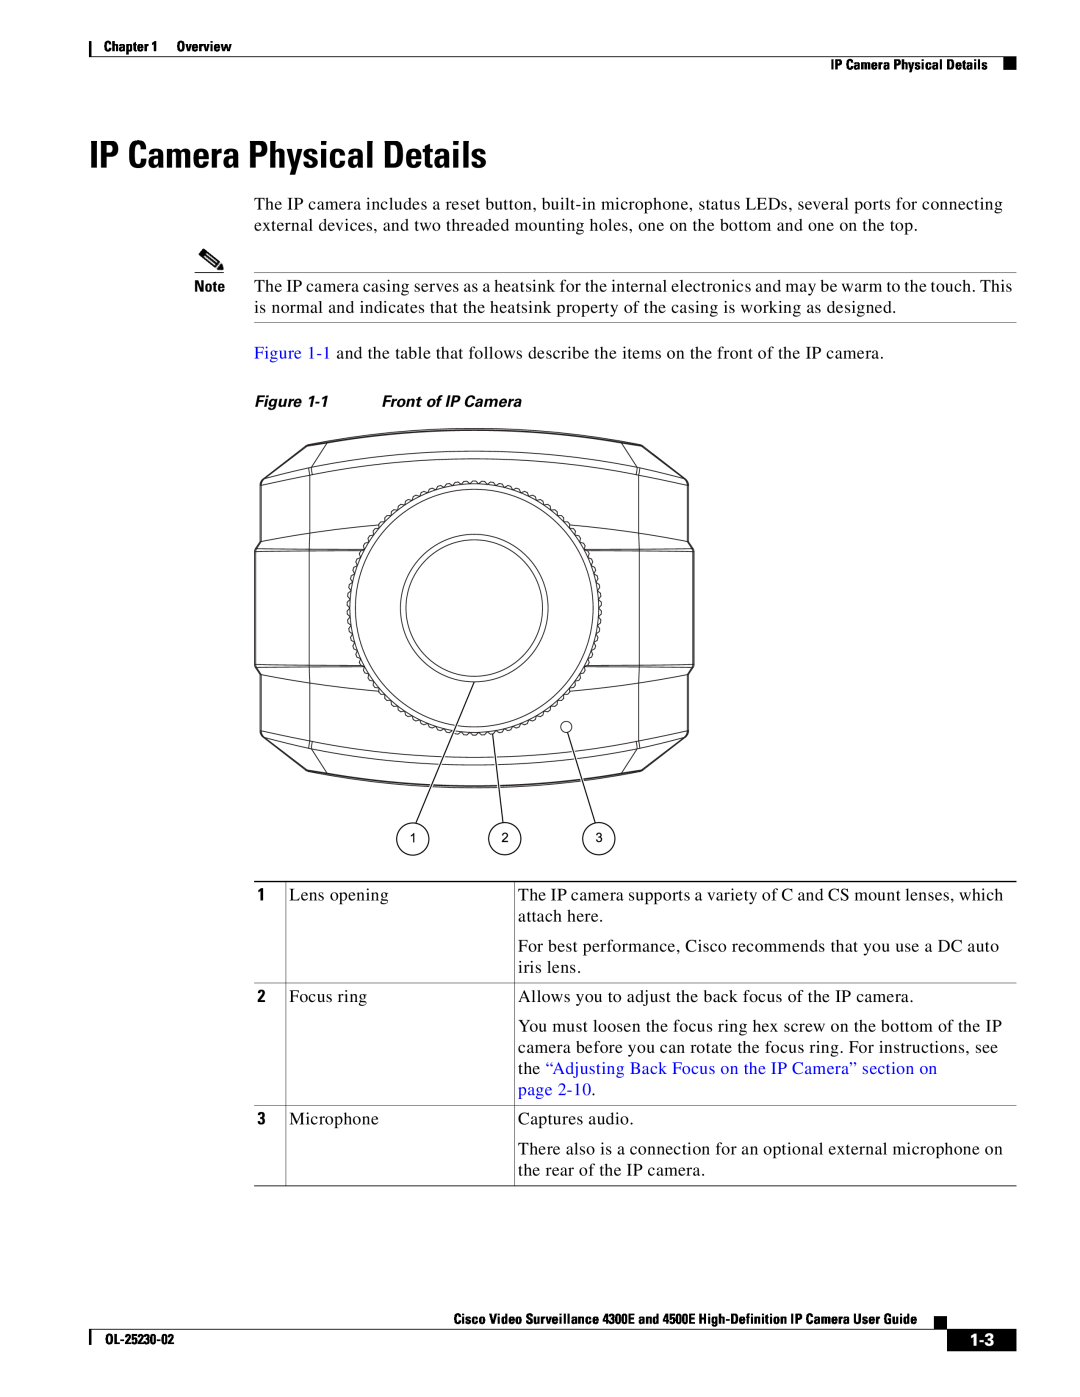 Cisco Systems 4500E, 4300E manual IP Camera Physical Details, page 